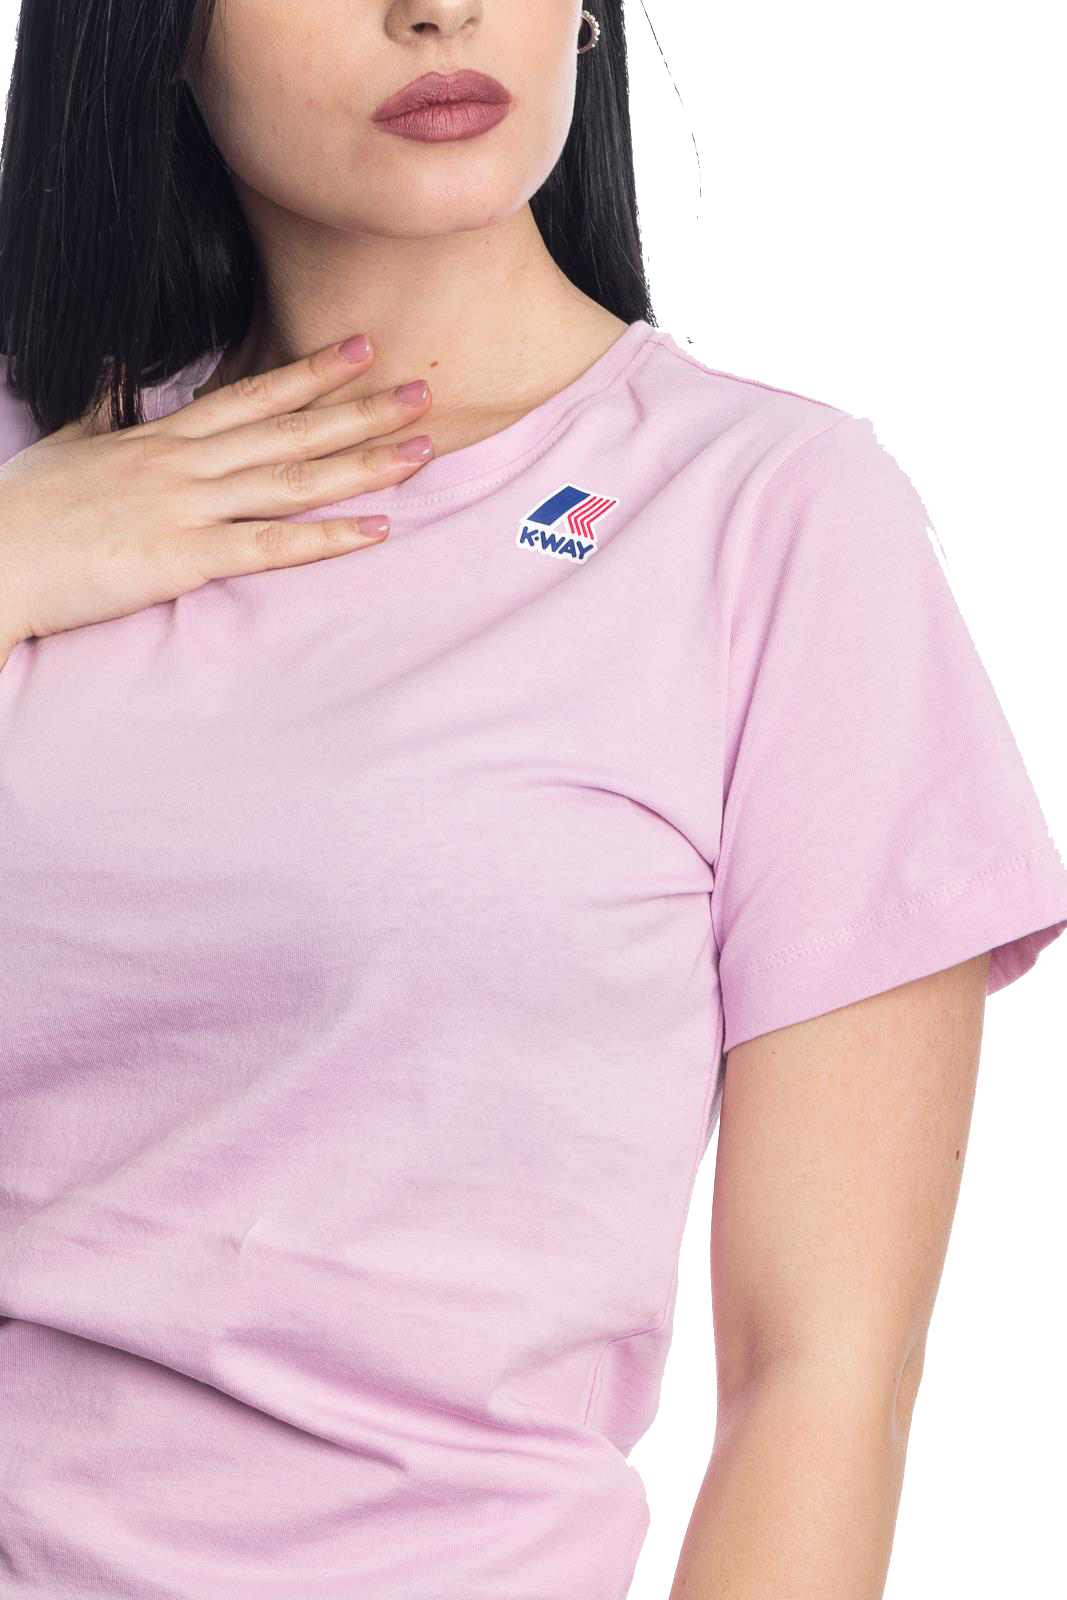 LE VRAI EDOUARD - T-ShirtsTop - T-Shirt - Unisex - Pink